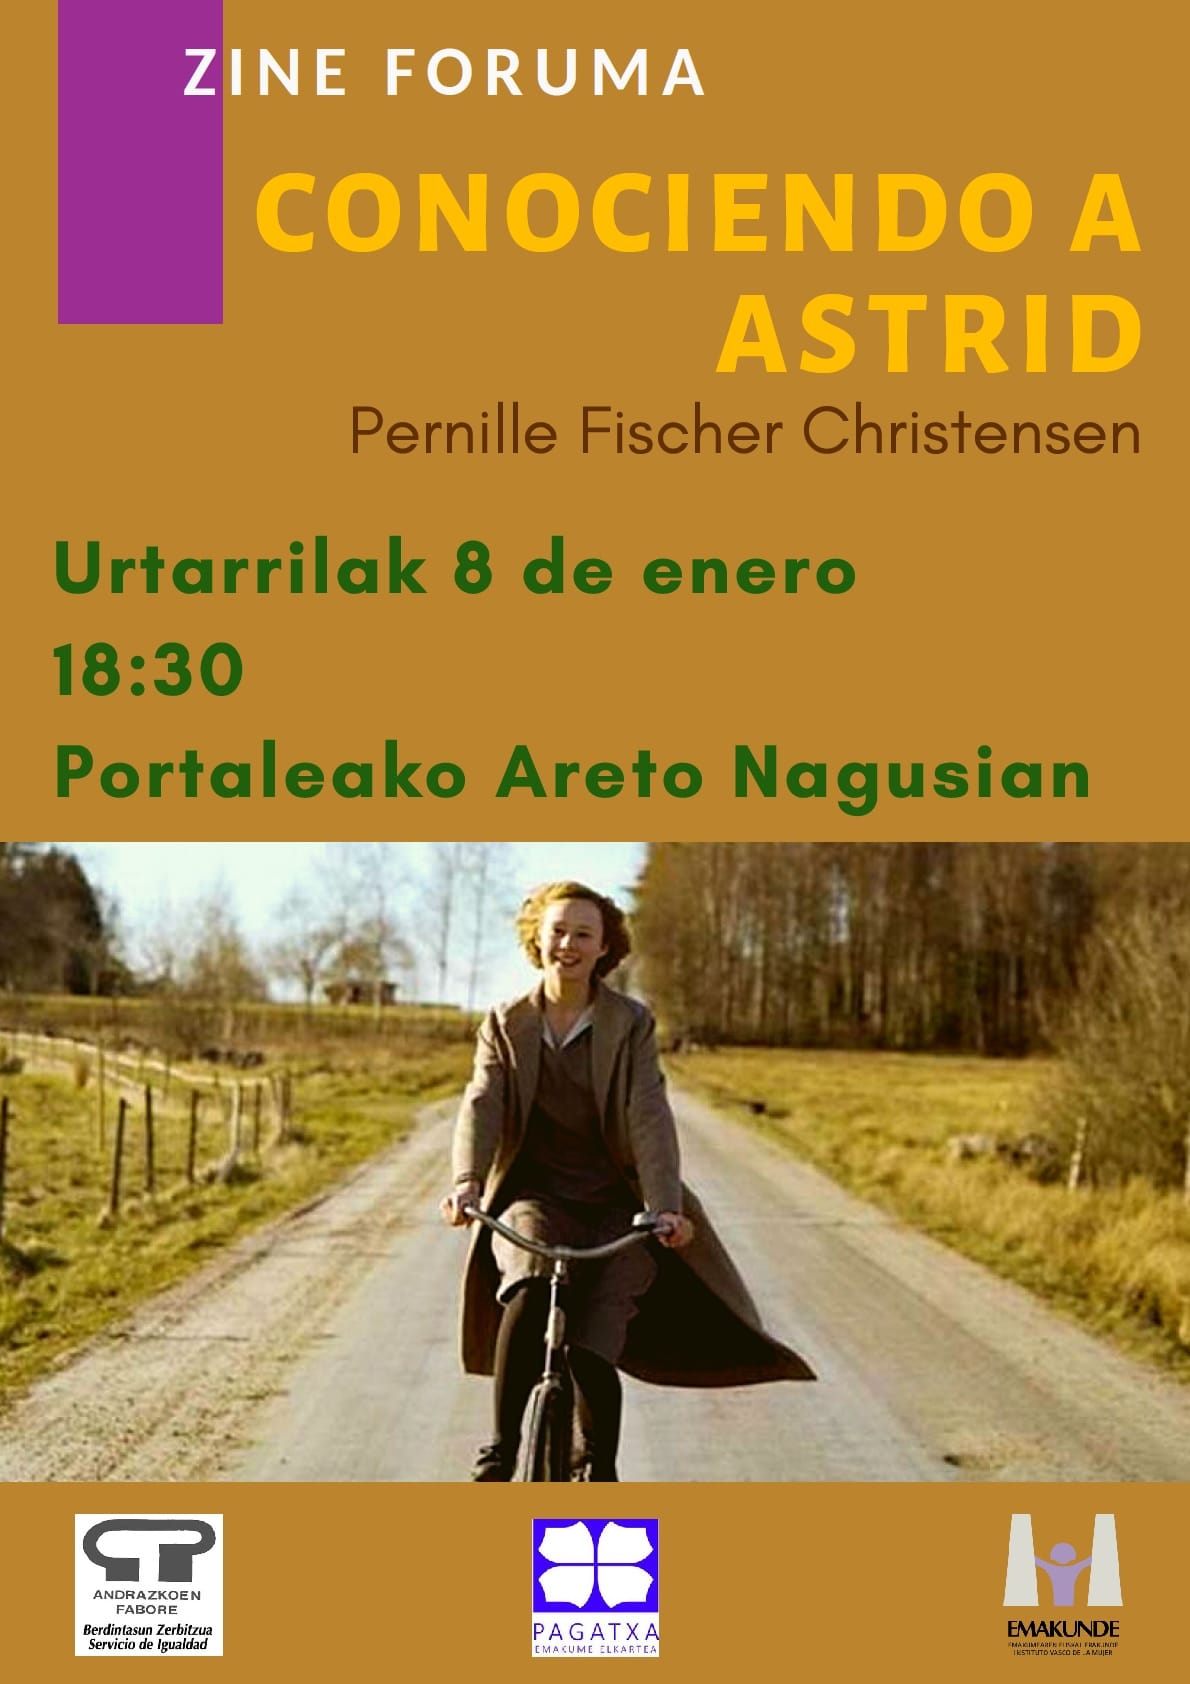 Cine Forum: Conociendo a Astrid